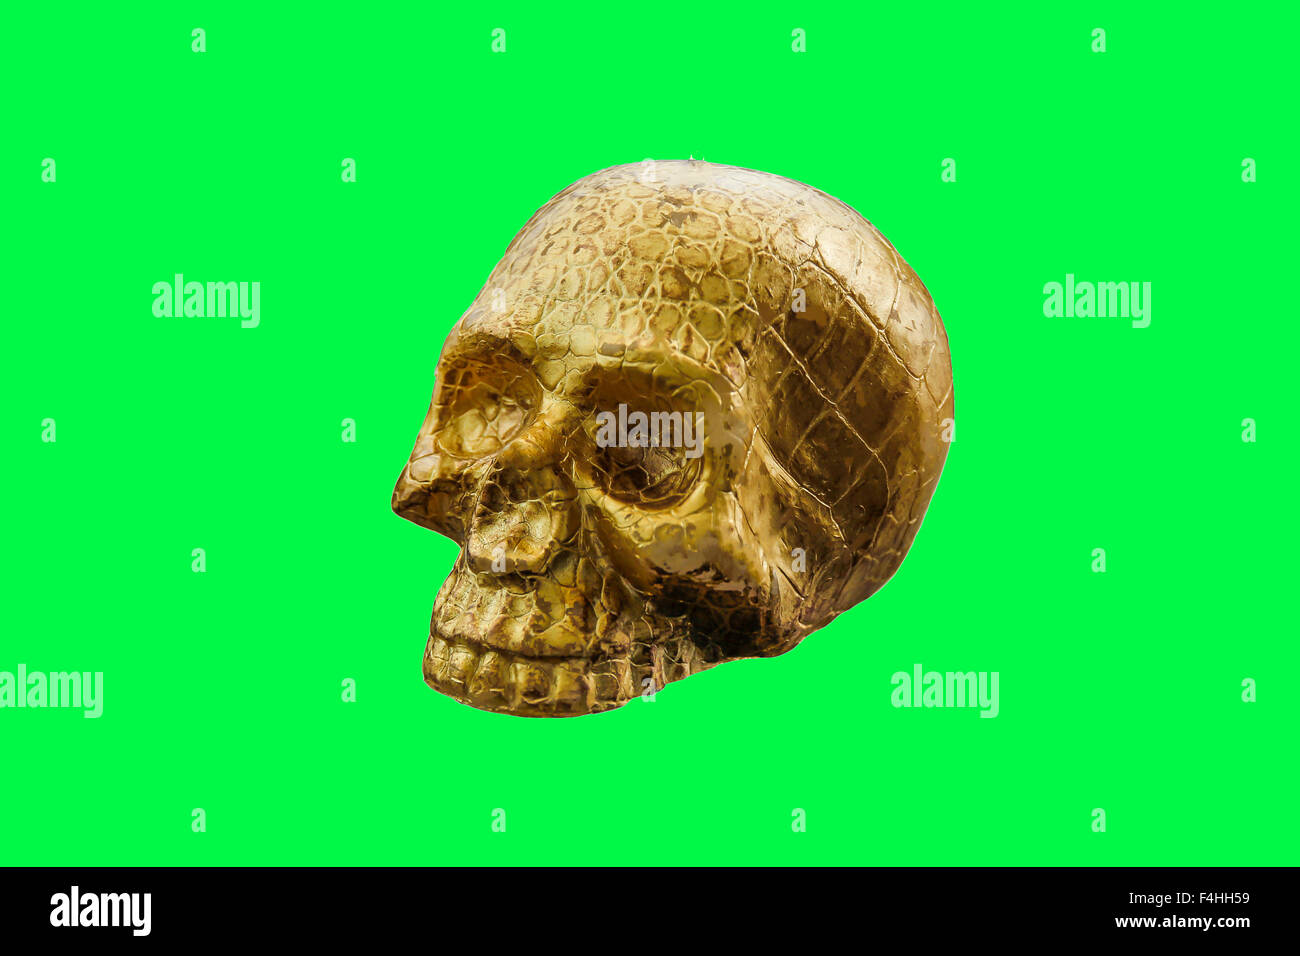 gold skull Isolated on green screen chroma key background. Stock Photo